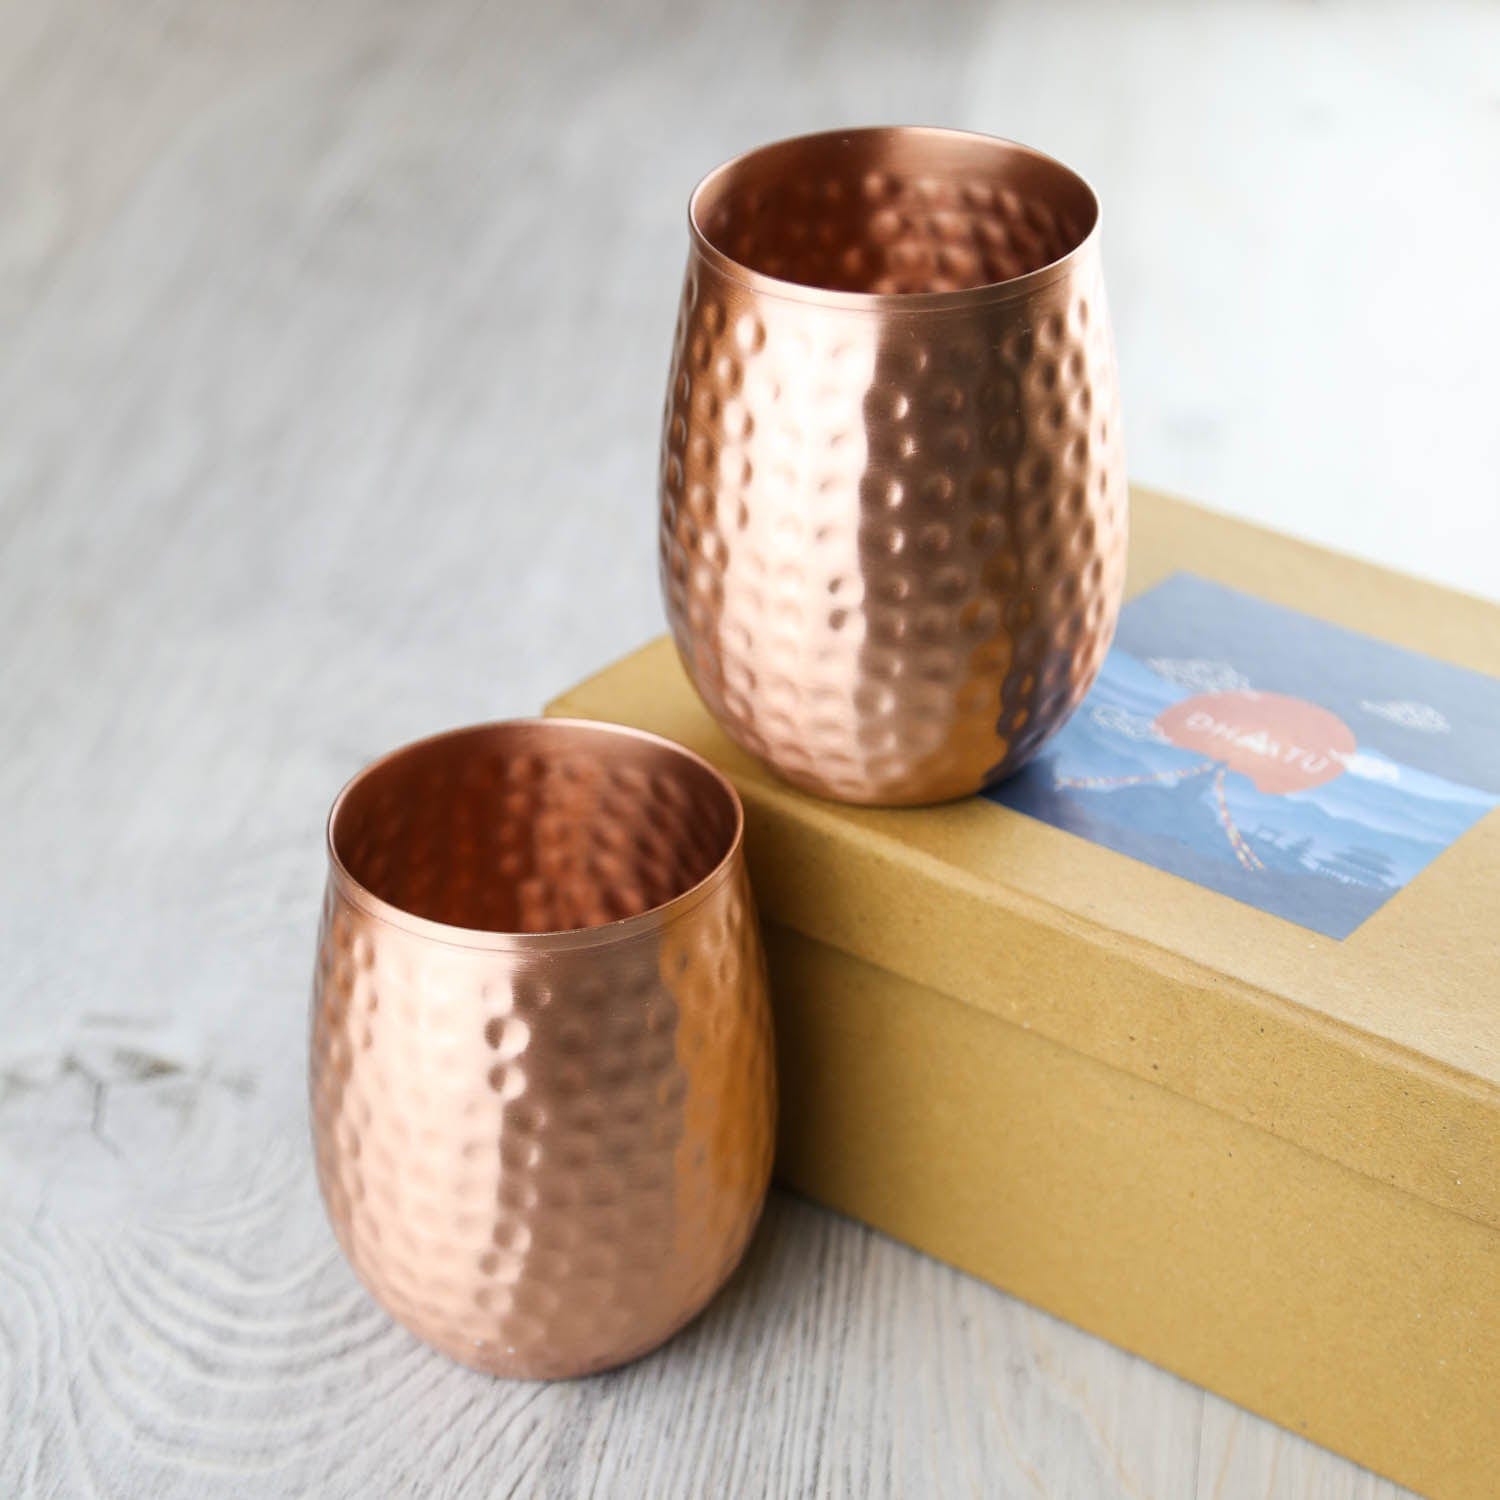  Ayurveda Health Healing Pure Copper Water Mugs